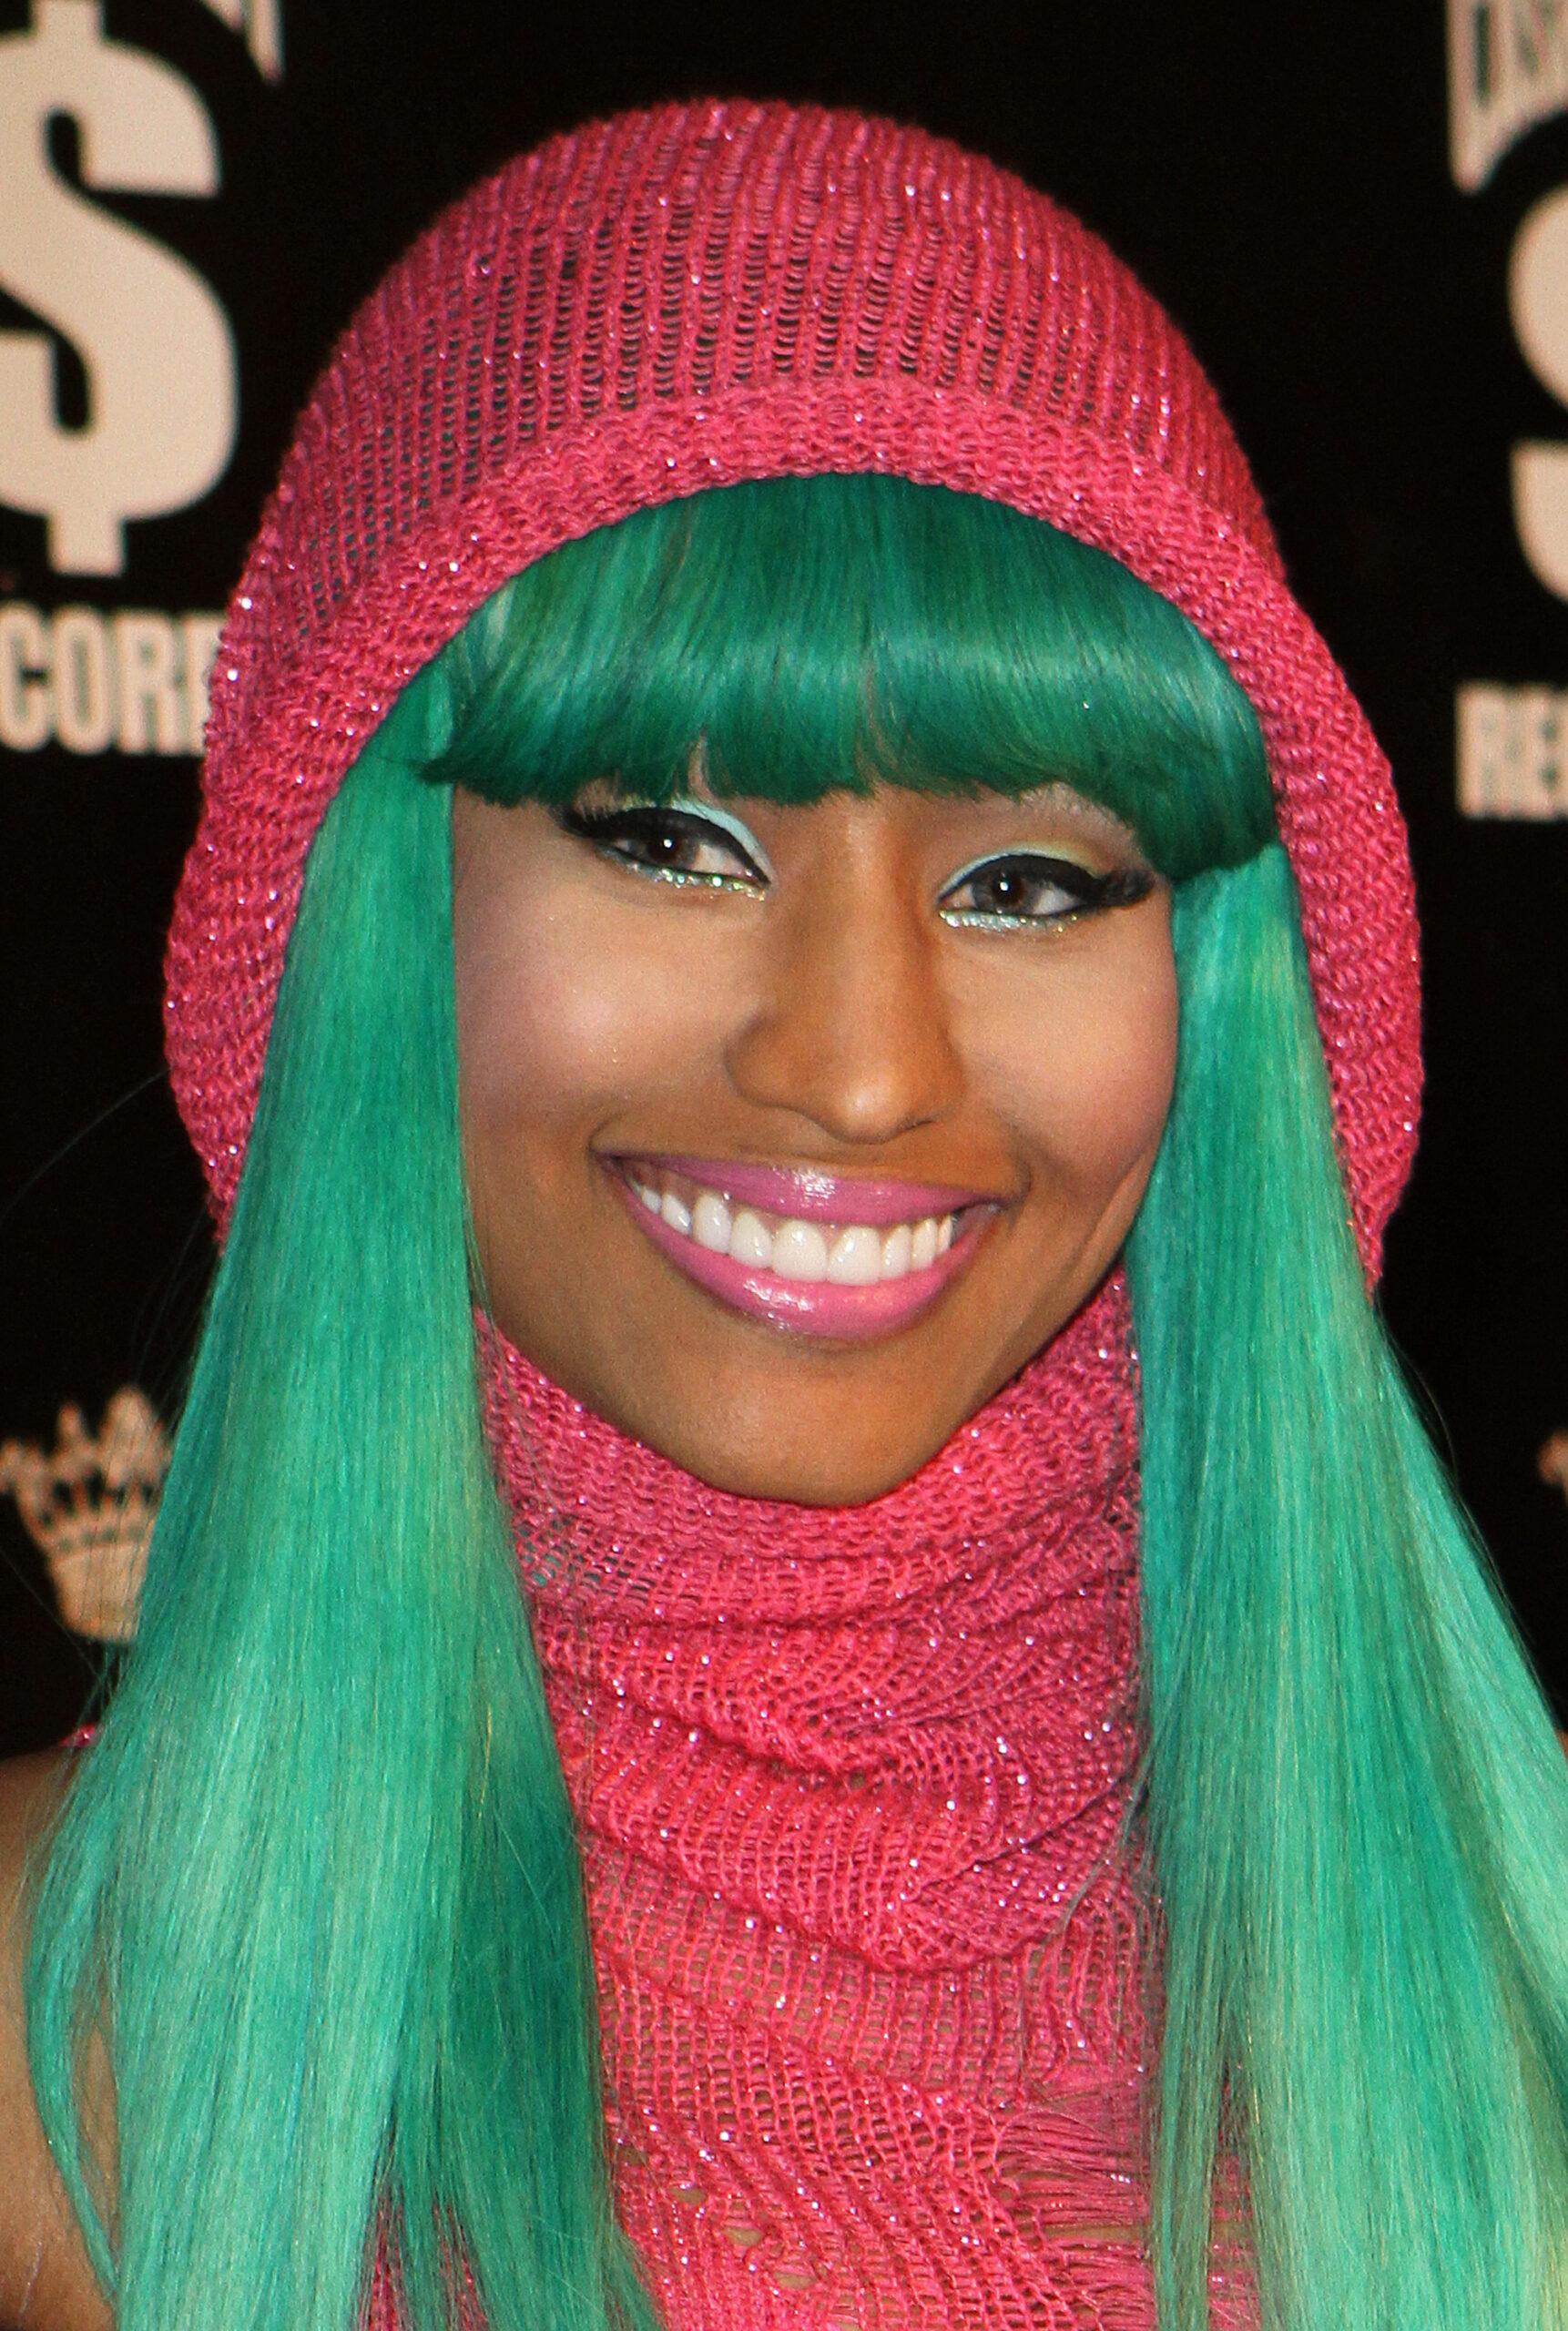 Nicki Minaj Opens Up About Drug Addiction, Mental Health Like Never Before